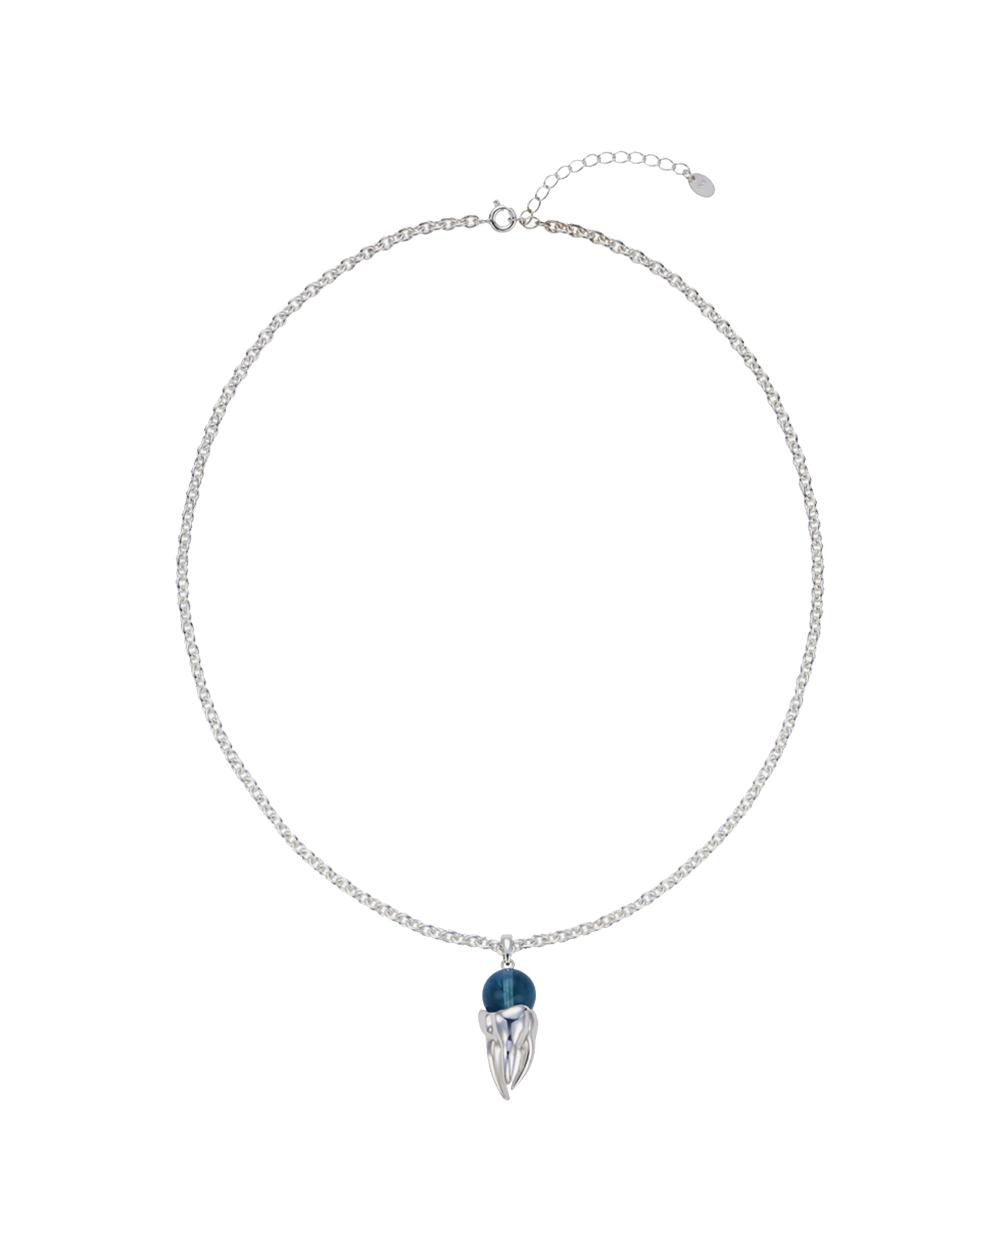 Teeth necklace (blue fluorite)